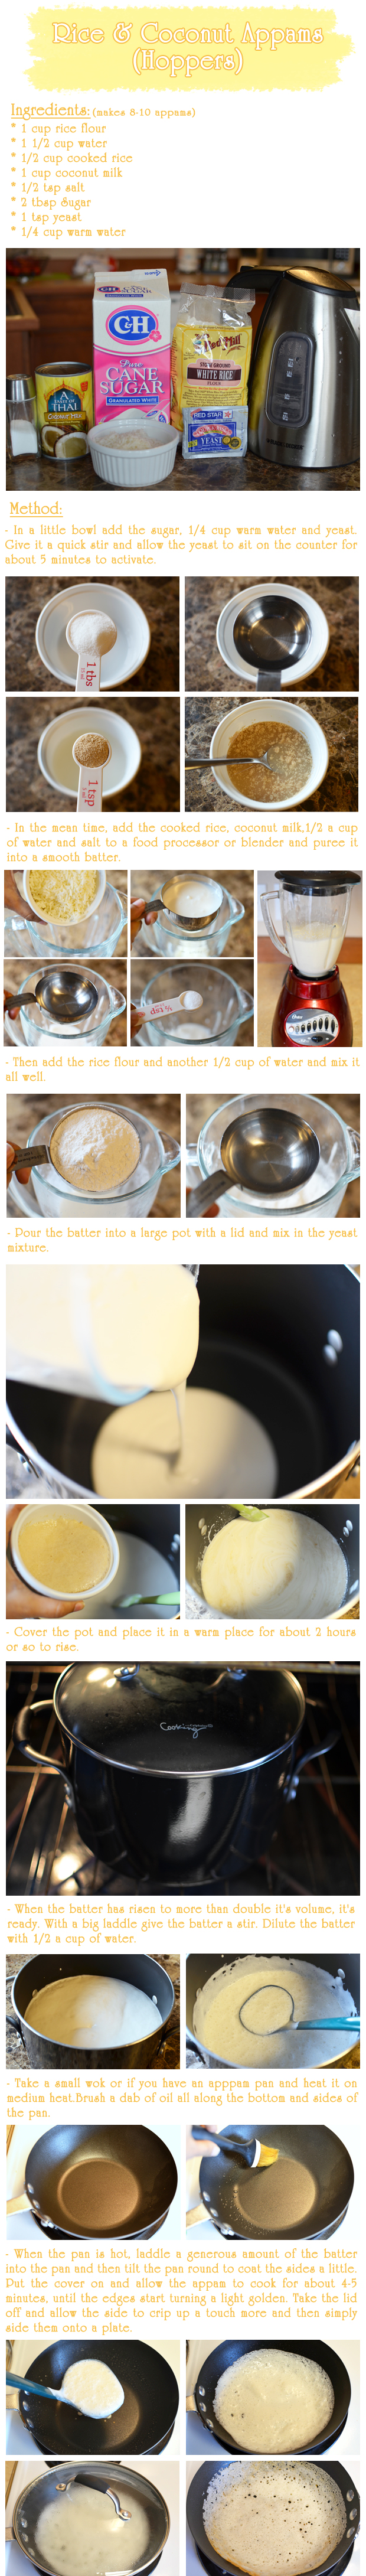 Appams (Rice & Coconut Hoppers) Recipe